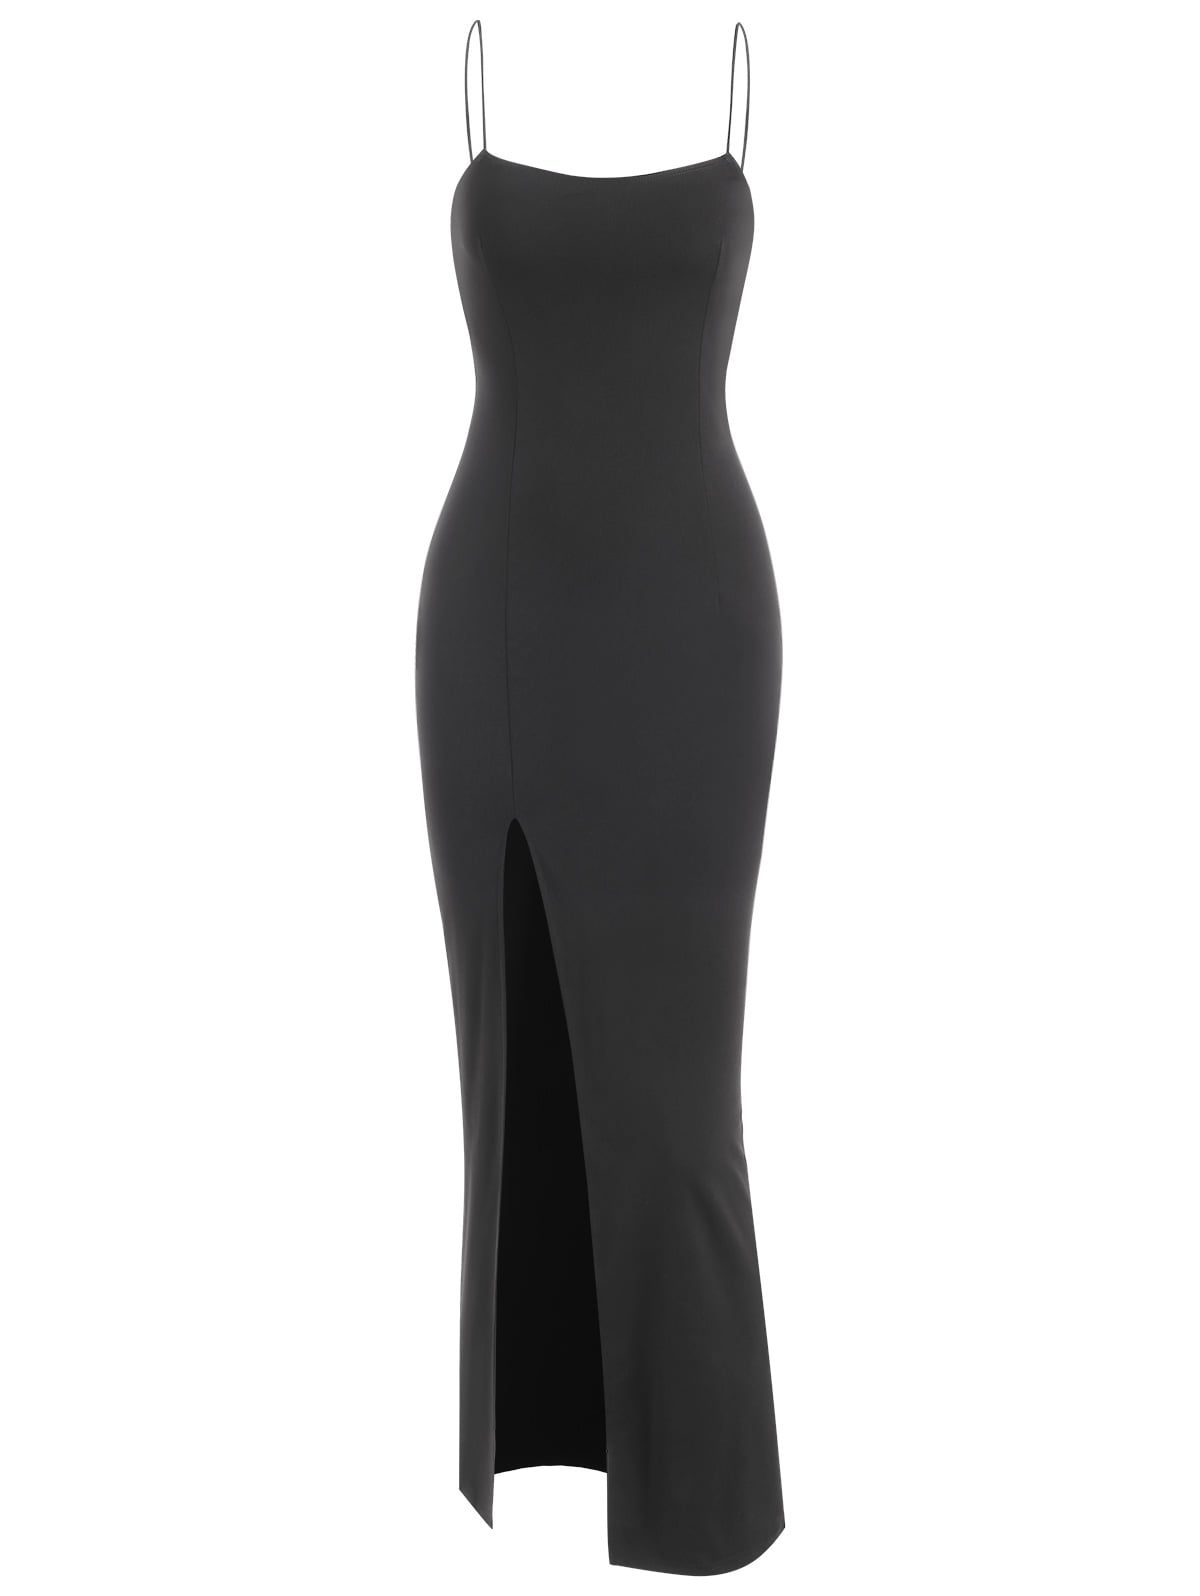 ZAFUL for Ladies Prom Dress or cocktail dress Spaghetti Strap Thigh Split  Slinky Bodycon Maxi Dress Black L 